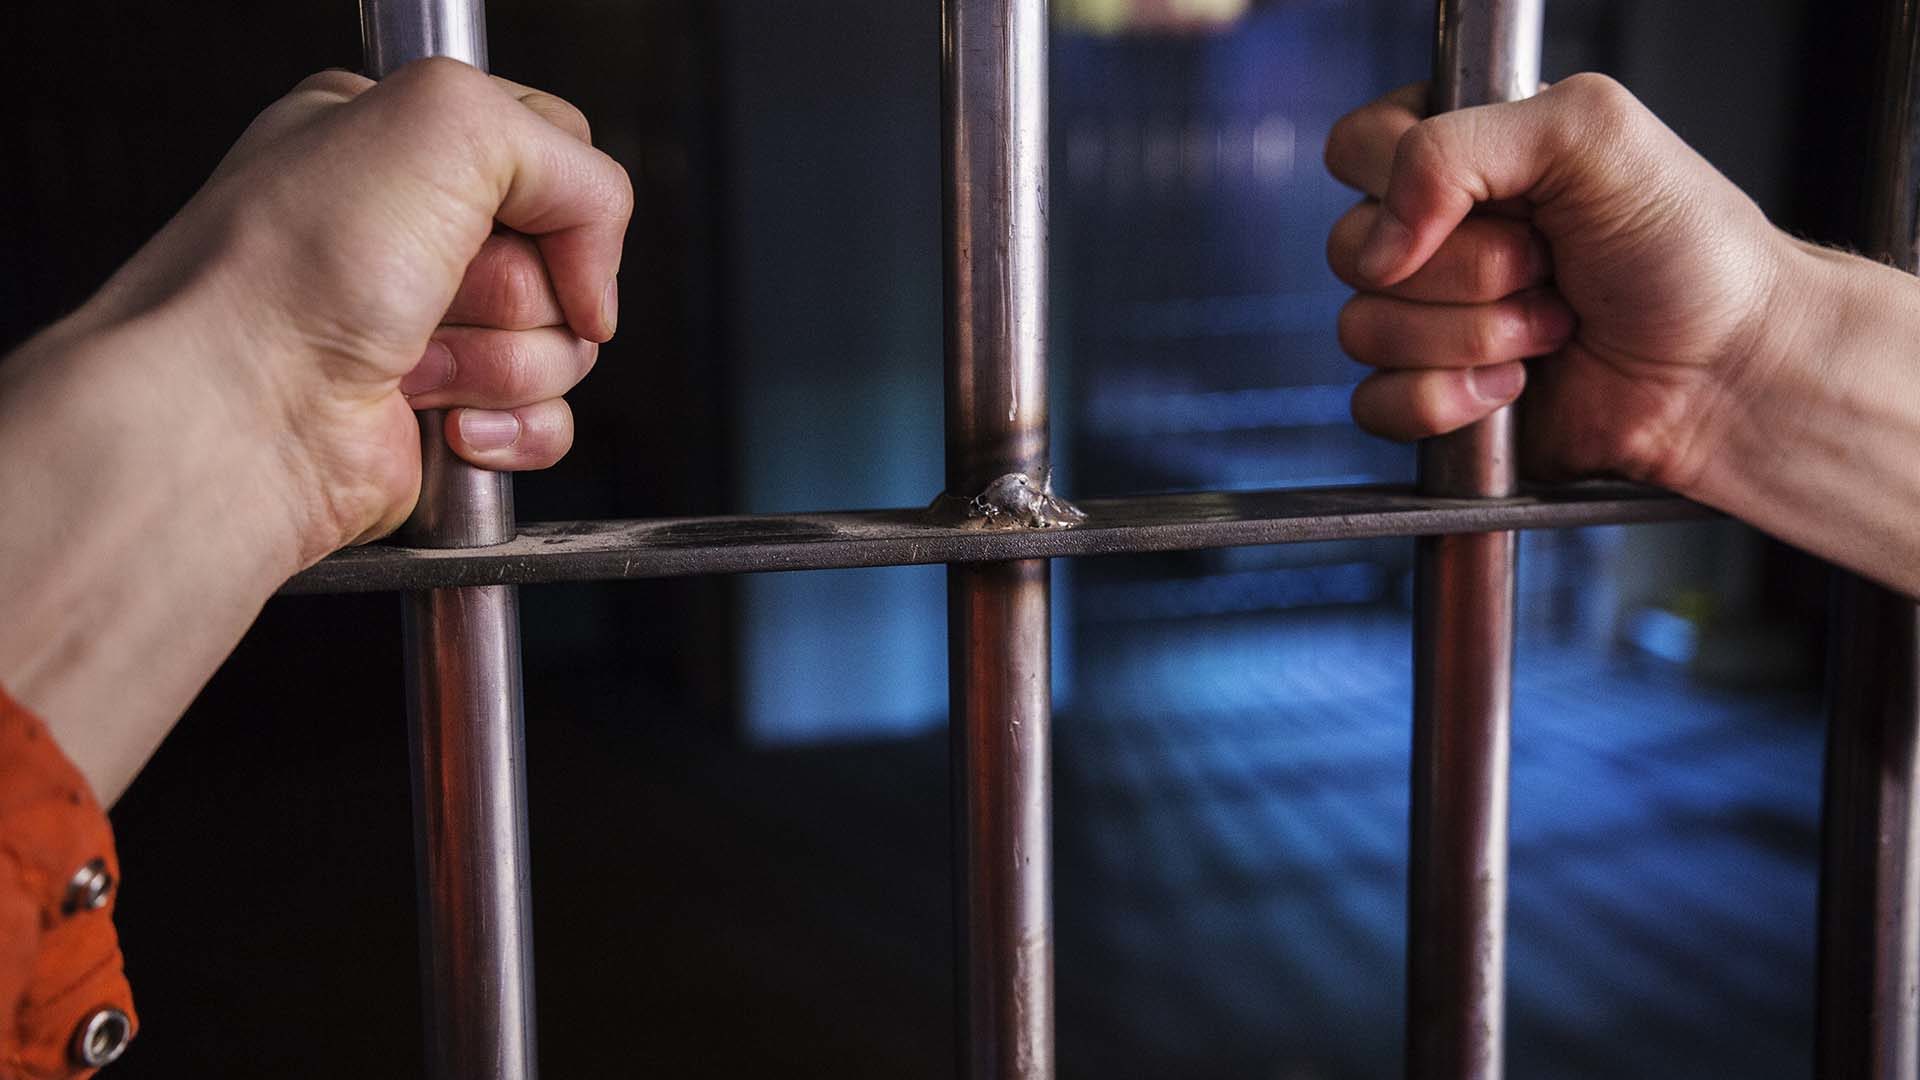 a man being held captive behind bars